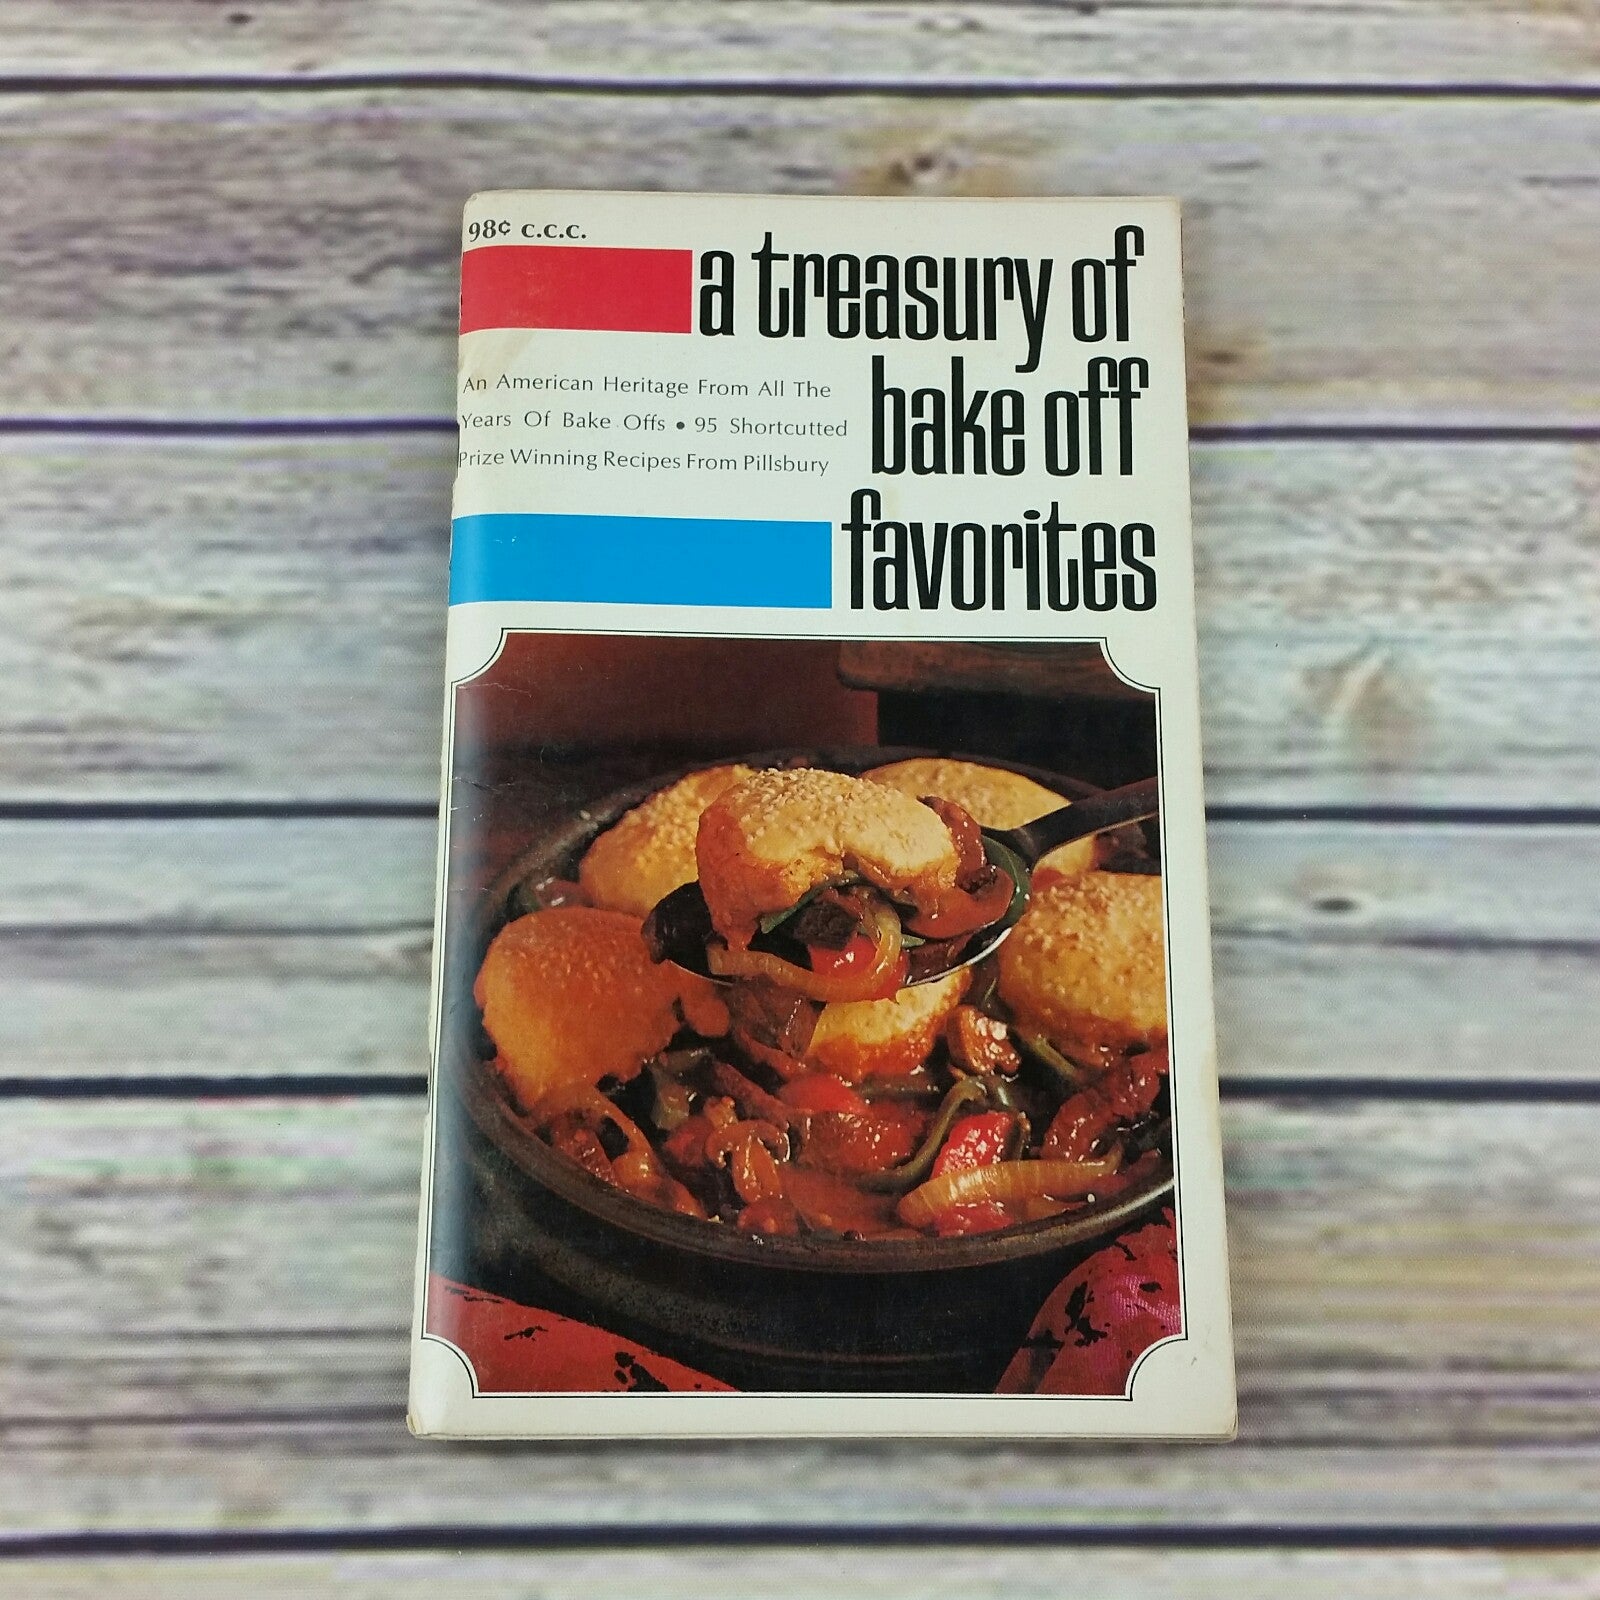 Vintage Pillsbury Cookbook A Treasury of Bake Off Favorite Recipes 1969 Paperback Booklet - At Grandma's Table